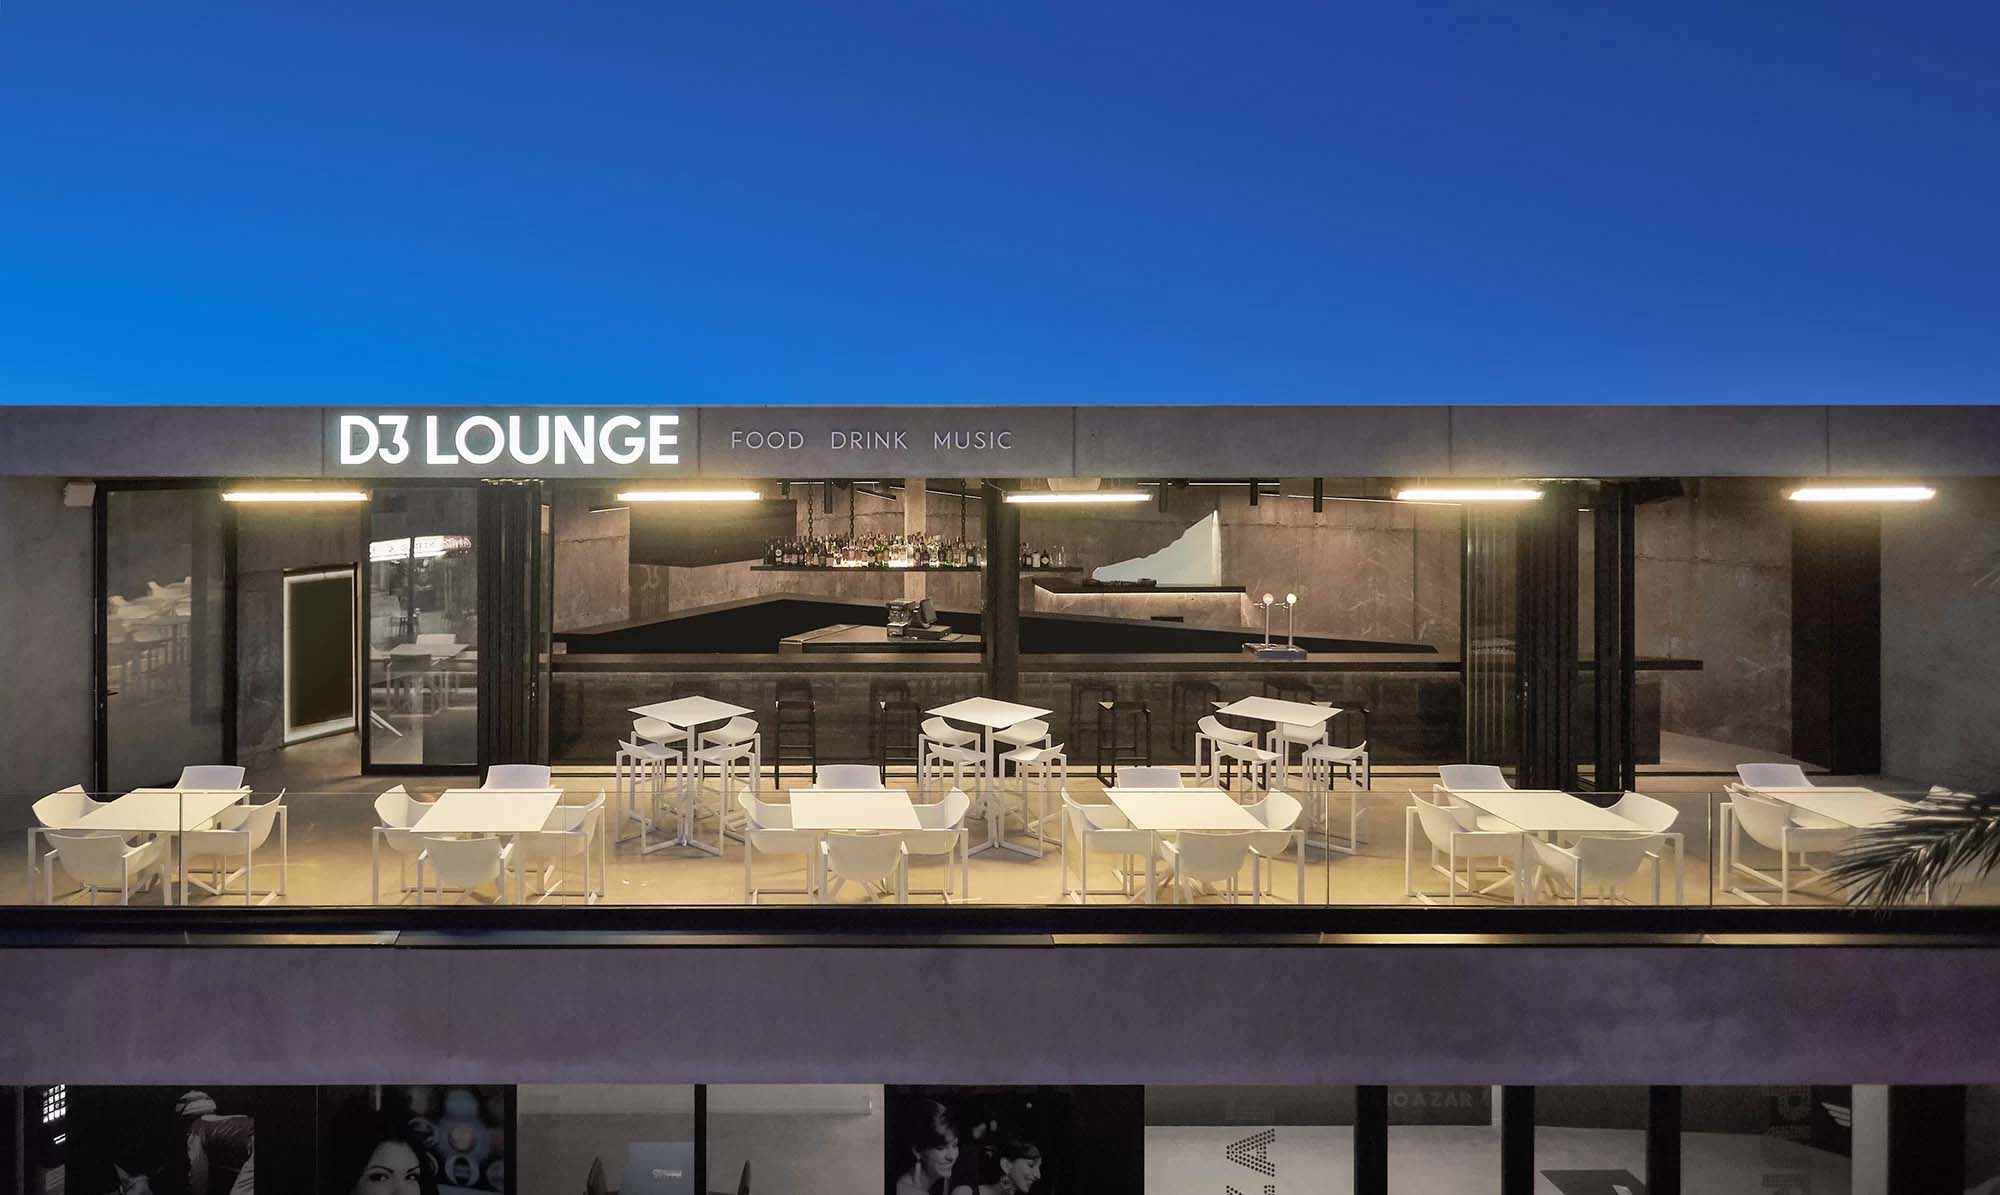 D3 Lounge